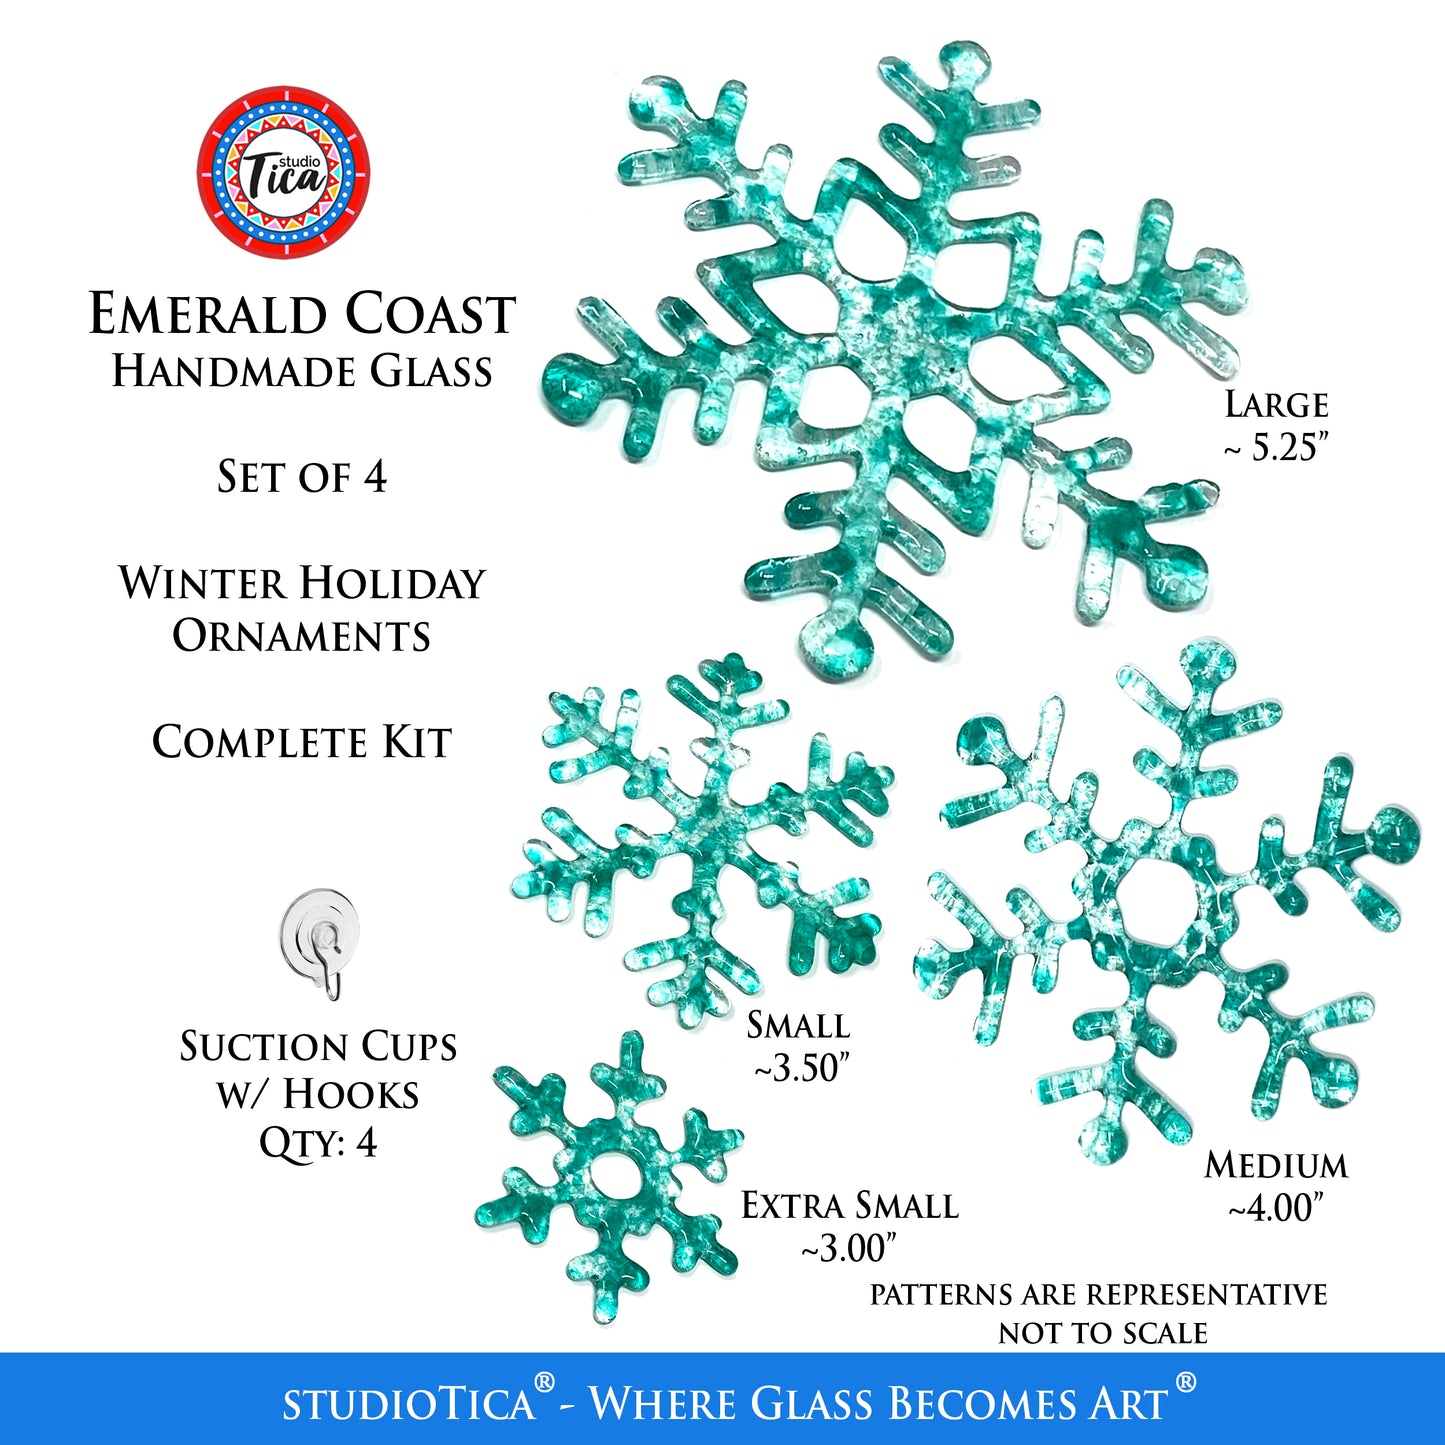 studioTica Emerald Coast - Handmade Glass Snowflakes